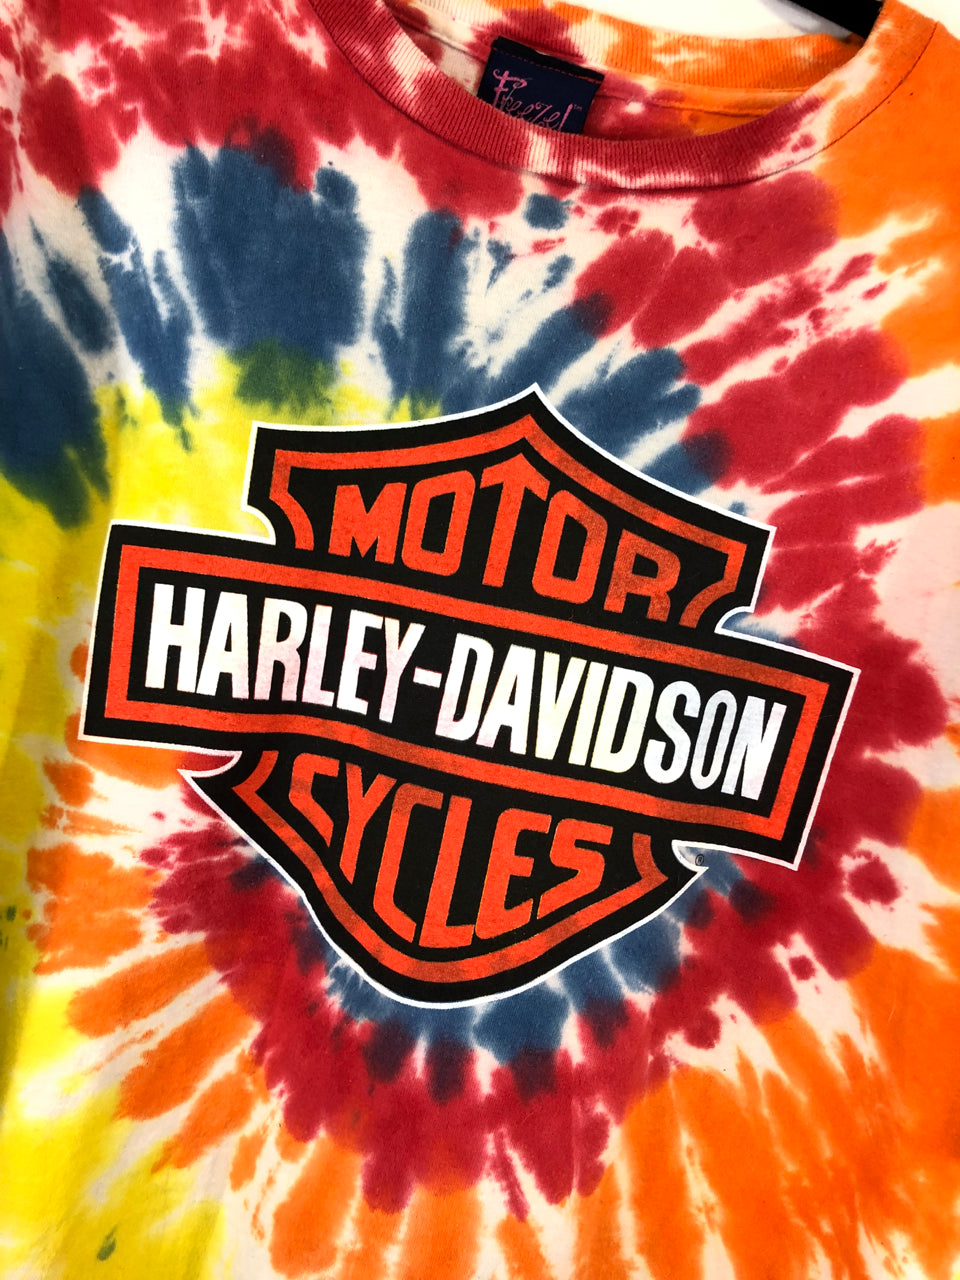 Harley-Davidson Tie Dye T-Shirt